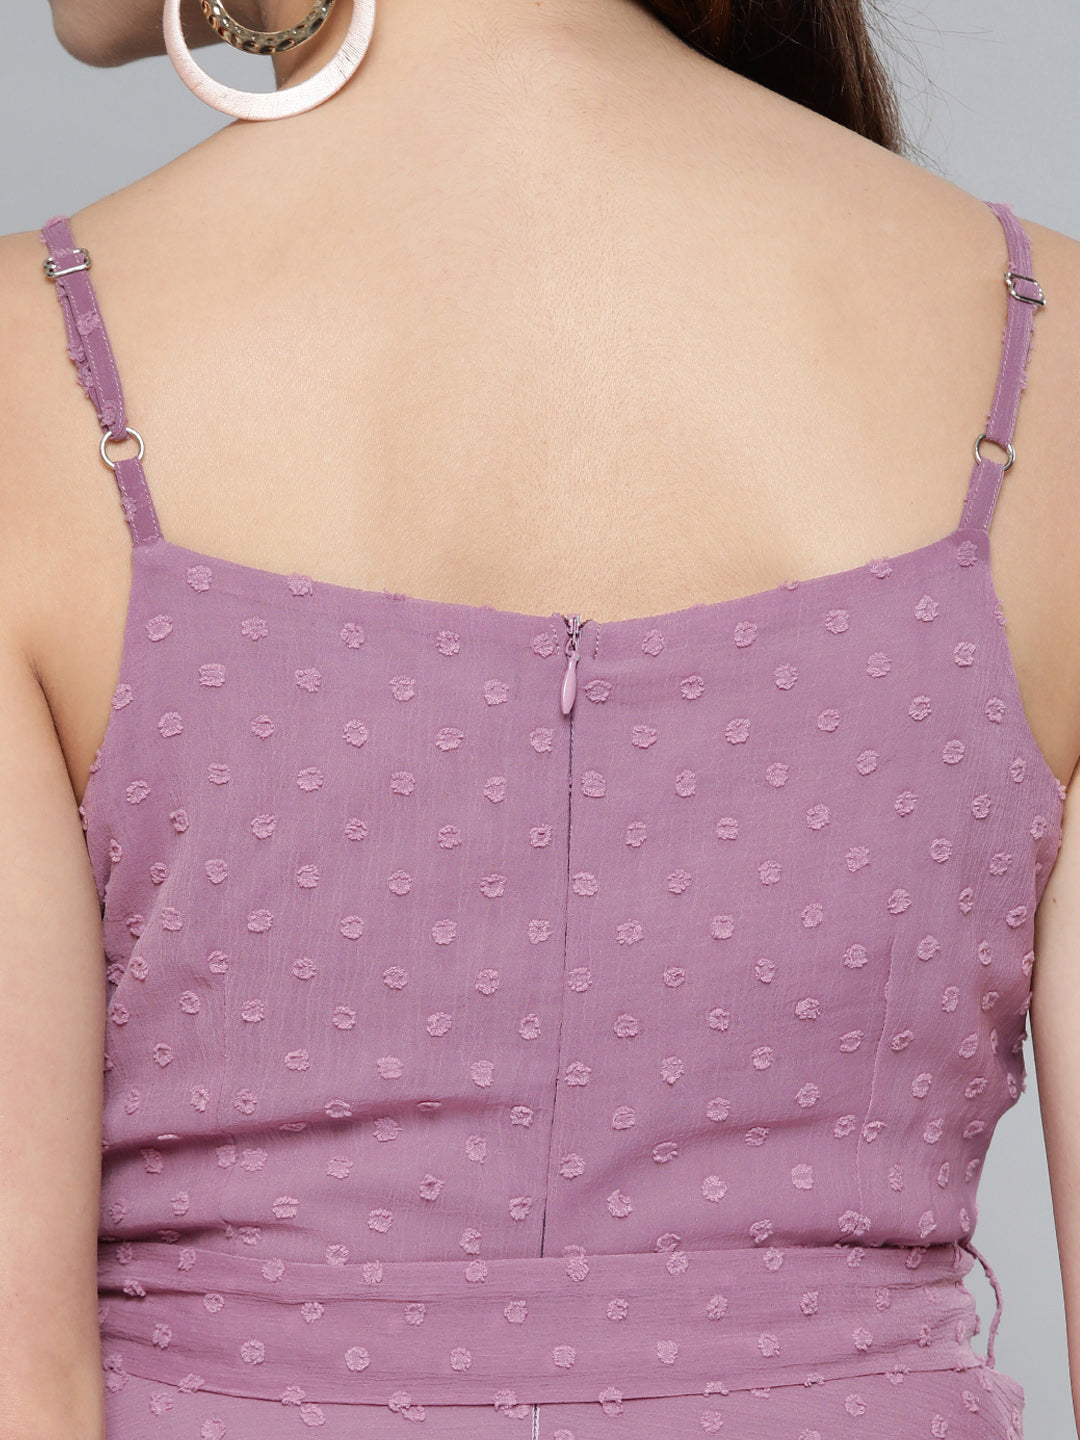 Purple Dobby Strappy Belted Midi Dress